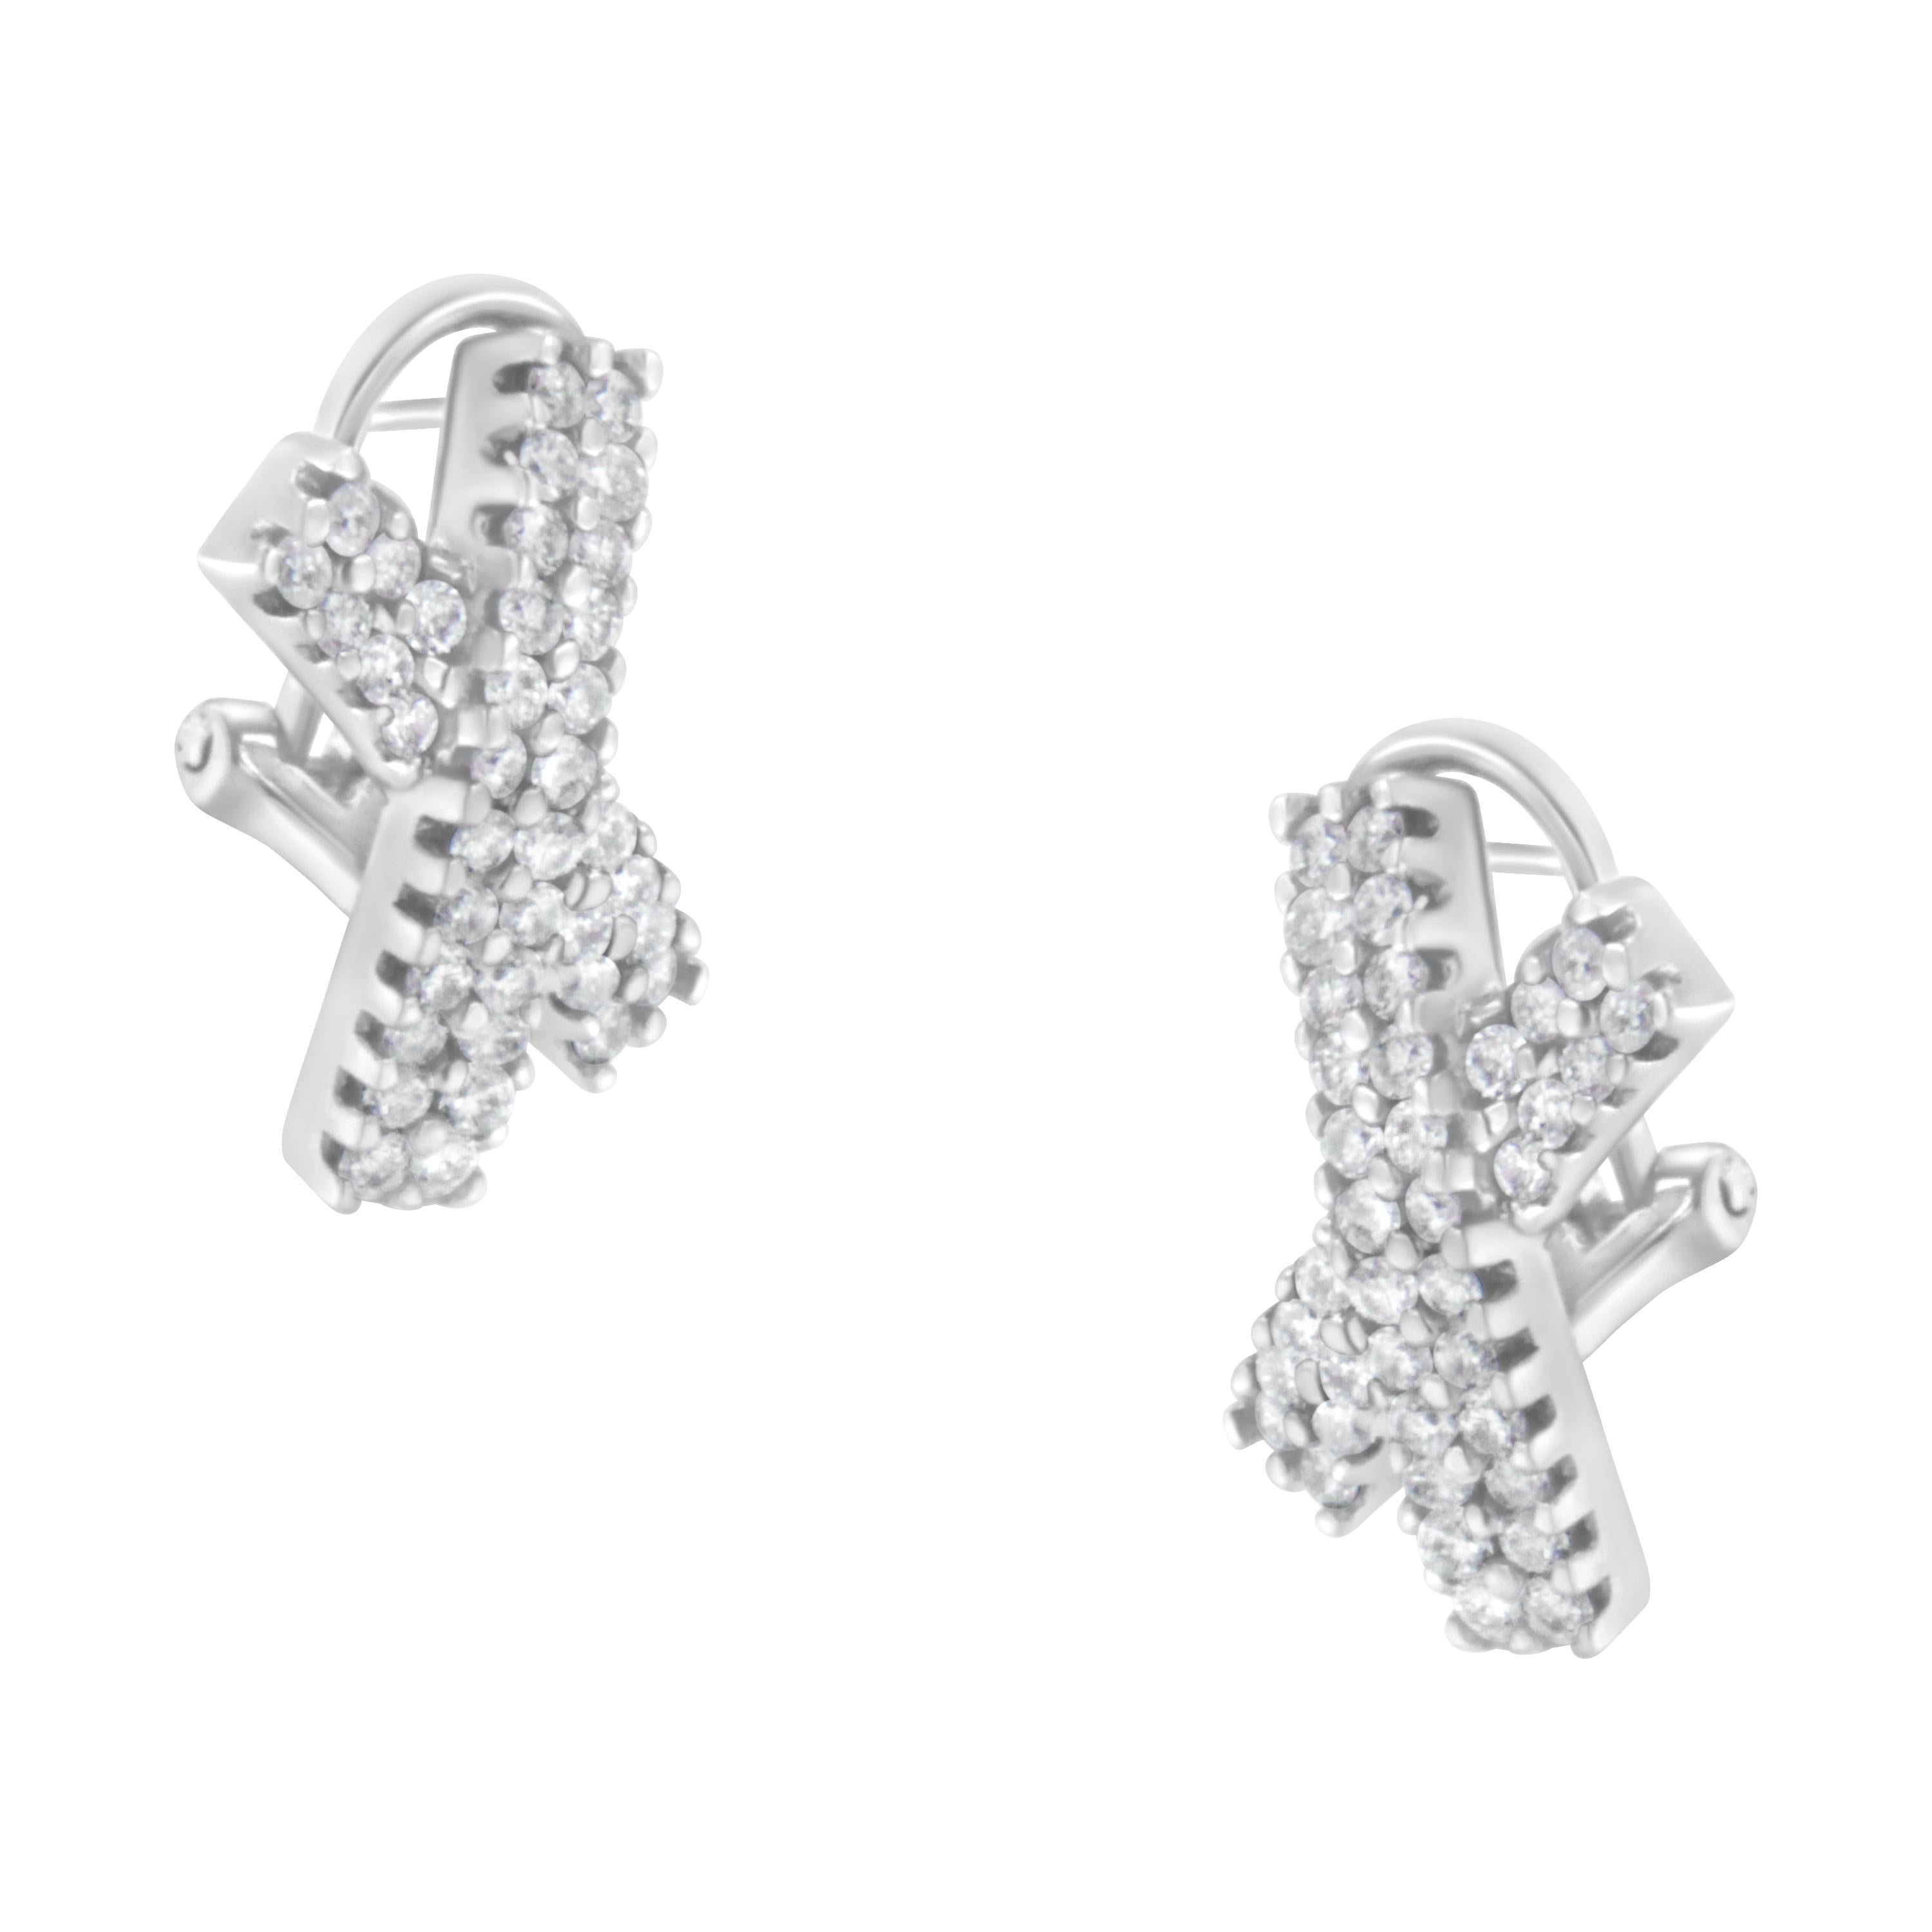 x shaped diamond earrings